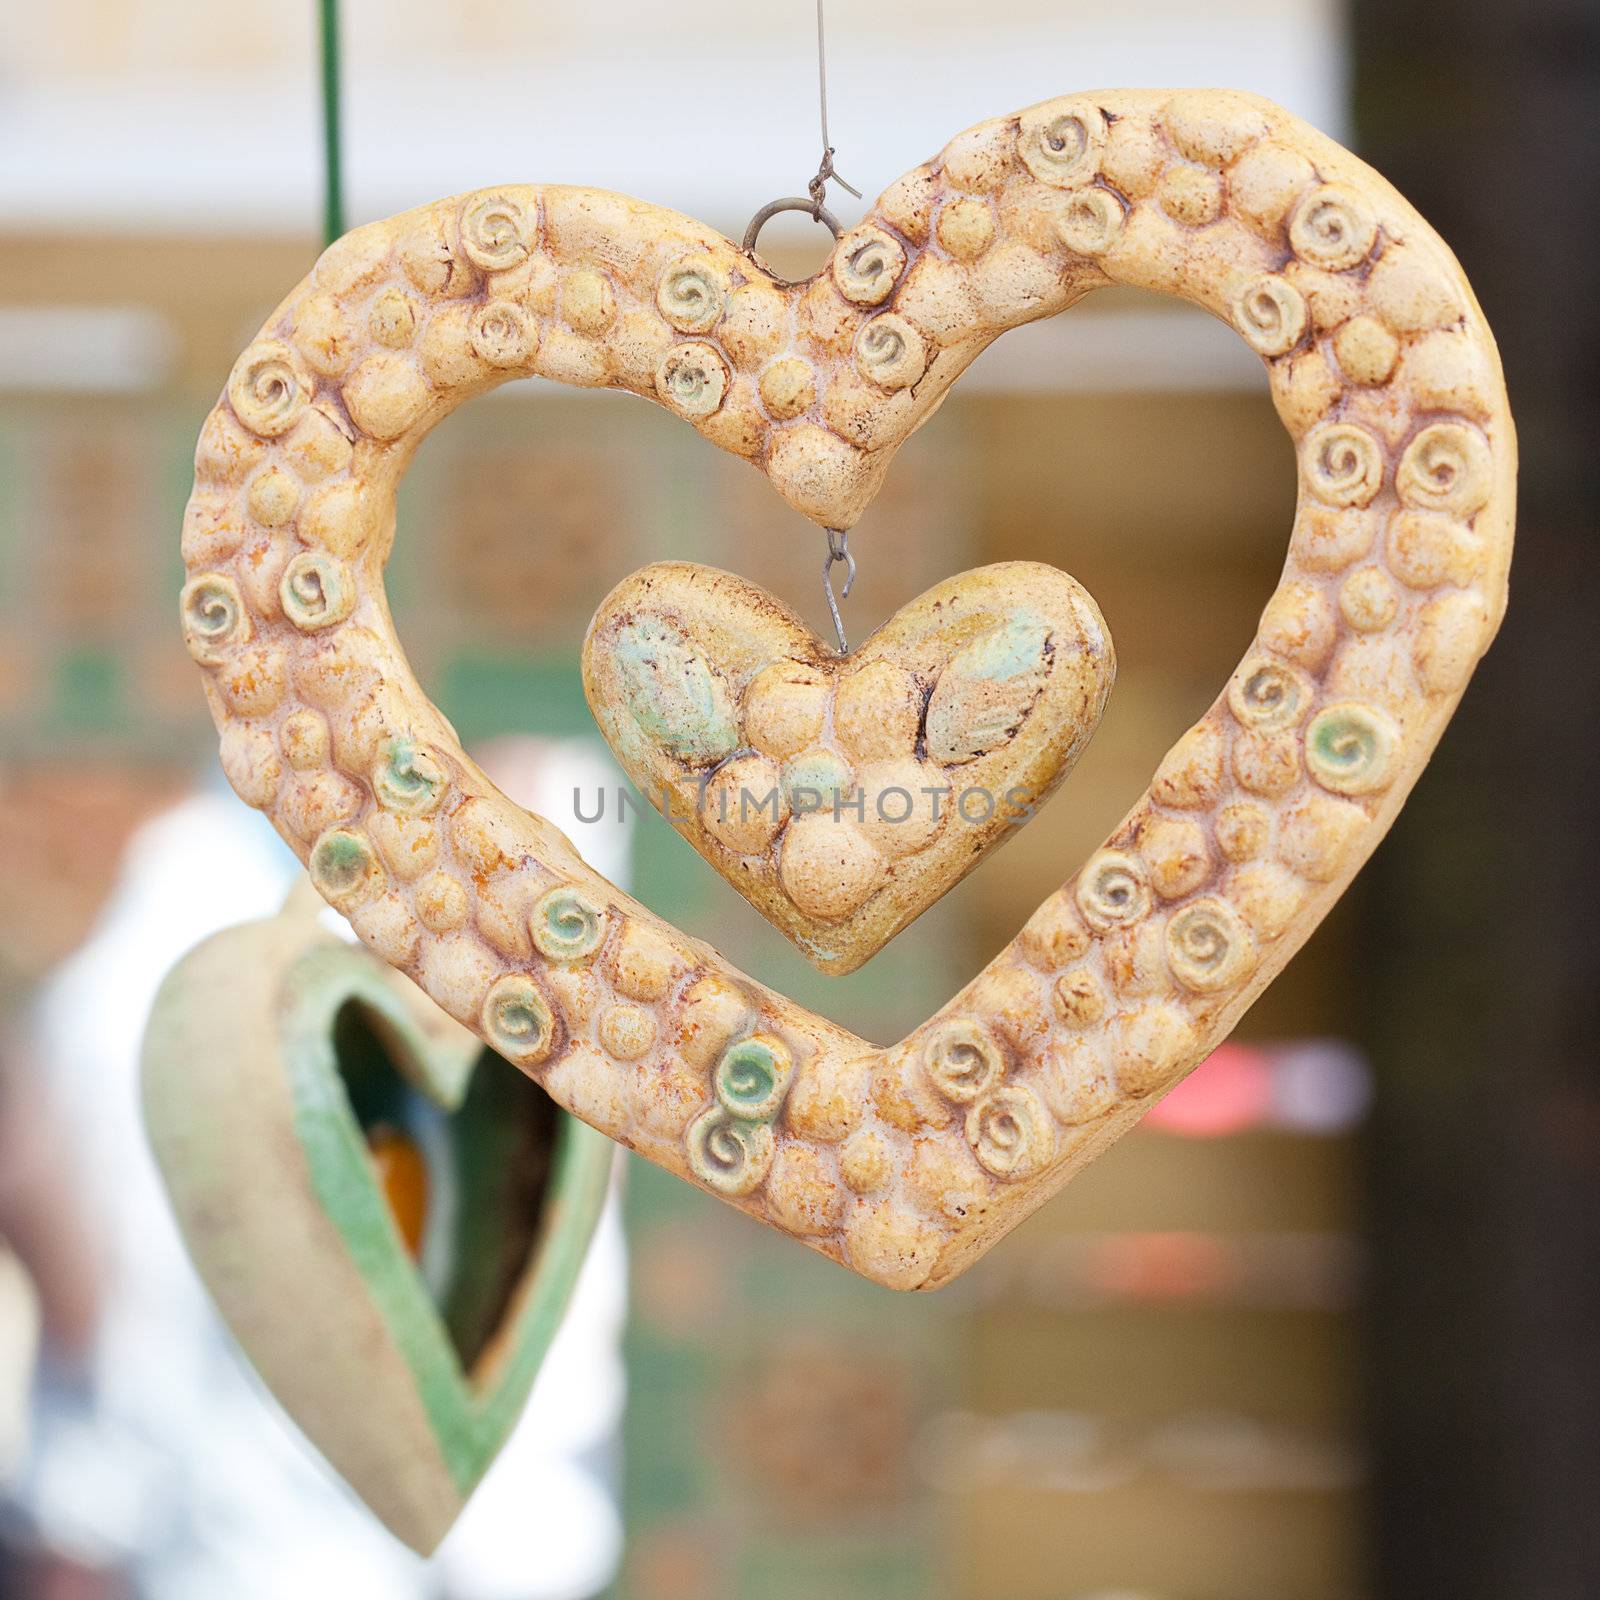 ceramic heart at the fair by jannyjus